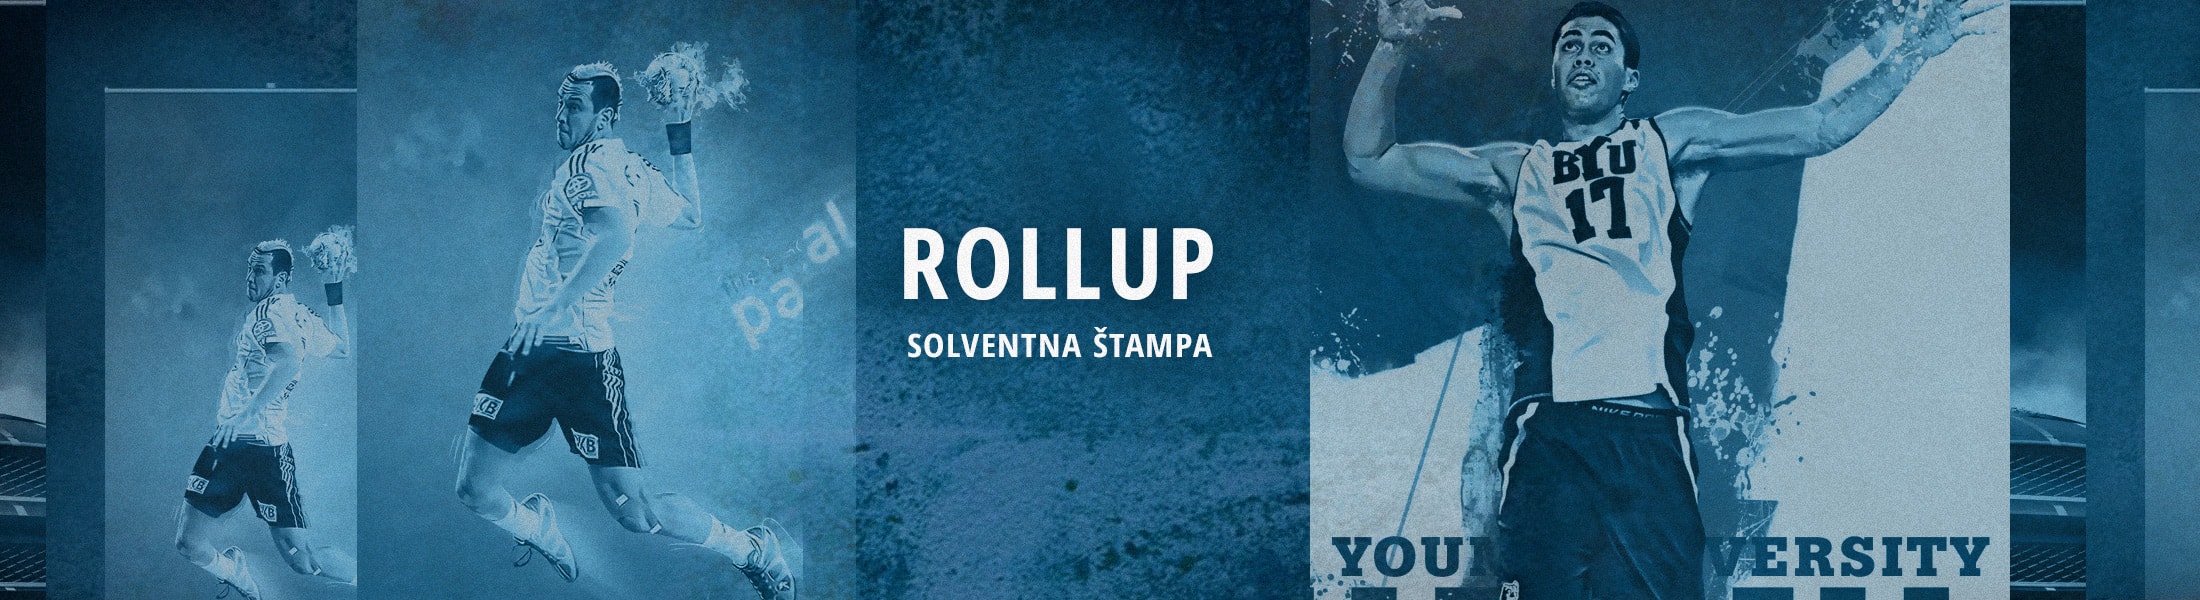 Solventna štampa - Rollup